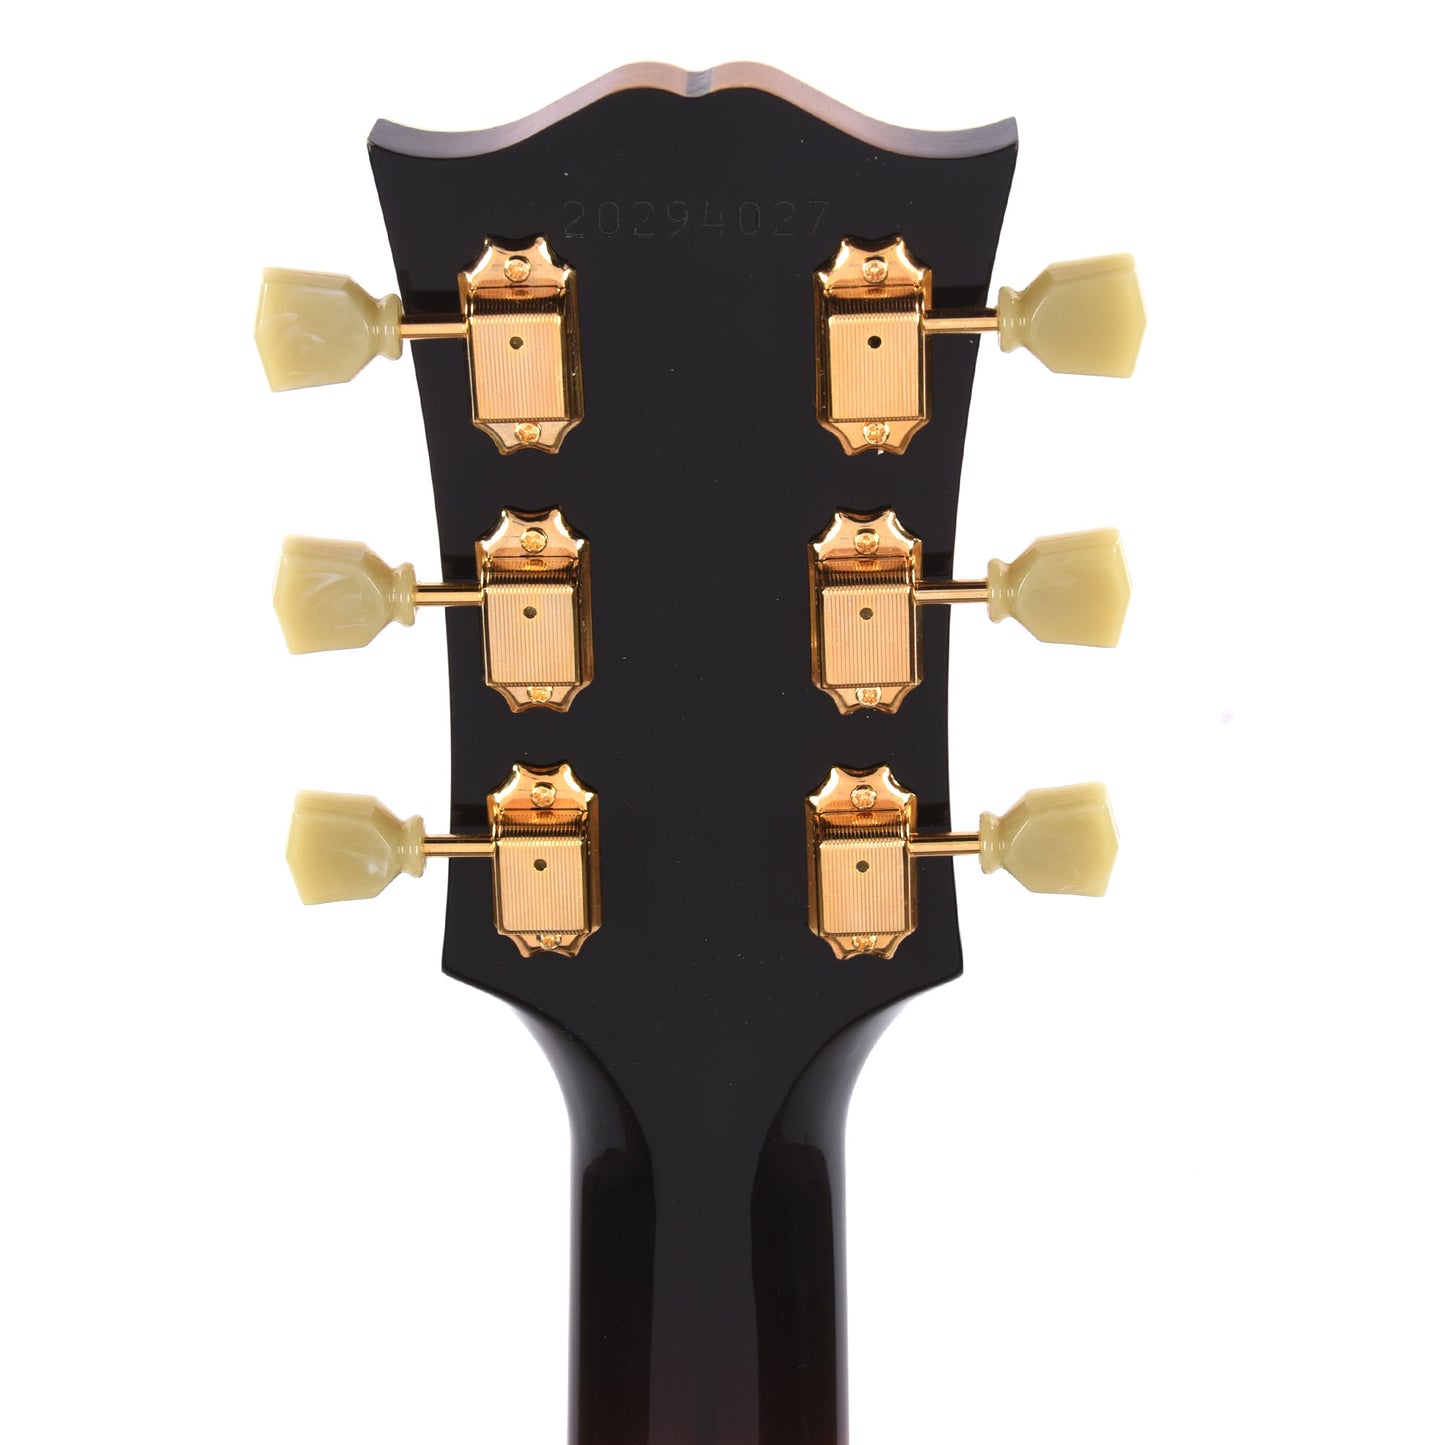 Gibson Modern SJ-200 Studio Rosewood Satin Natural